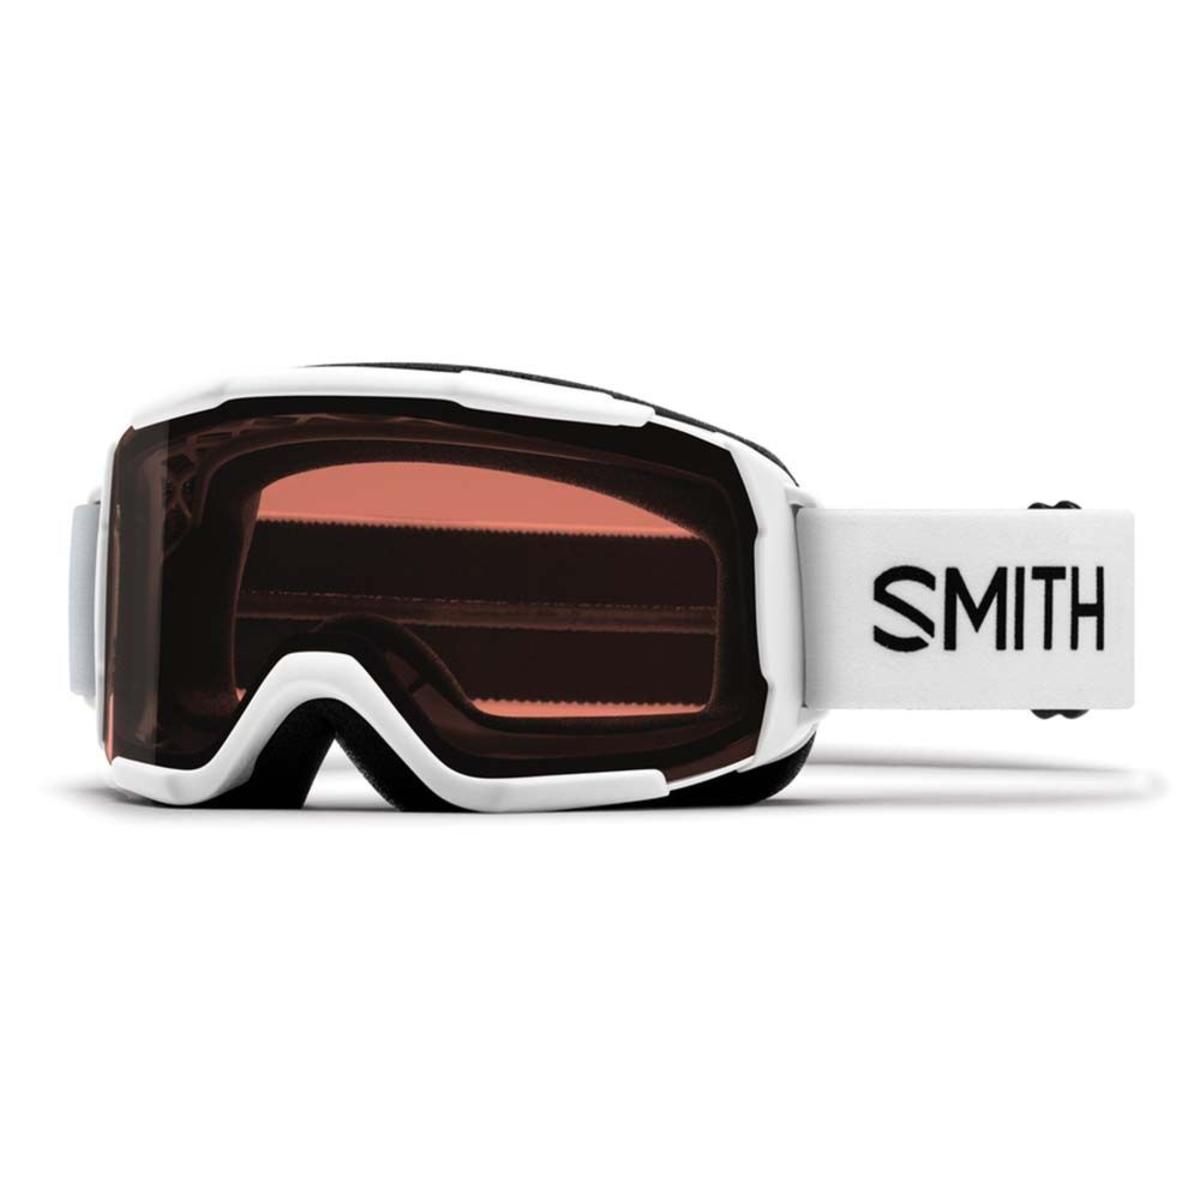 Smith Optics Daredevil Junior Goggles RC36 - White Frame